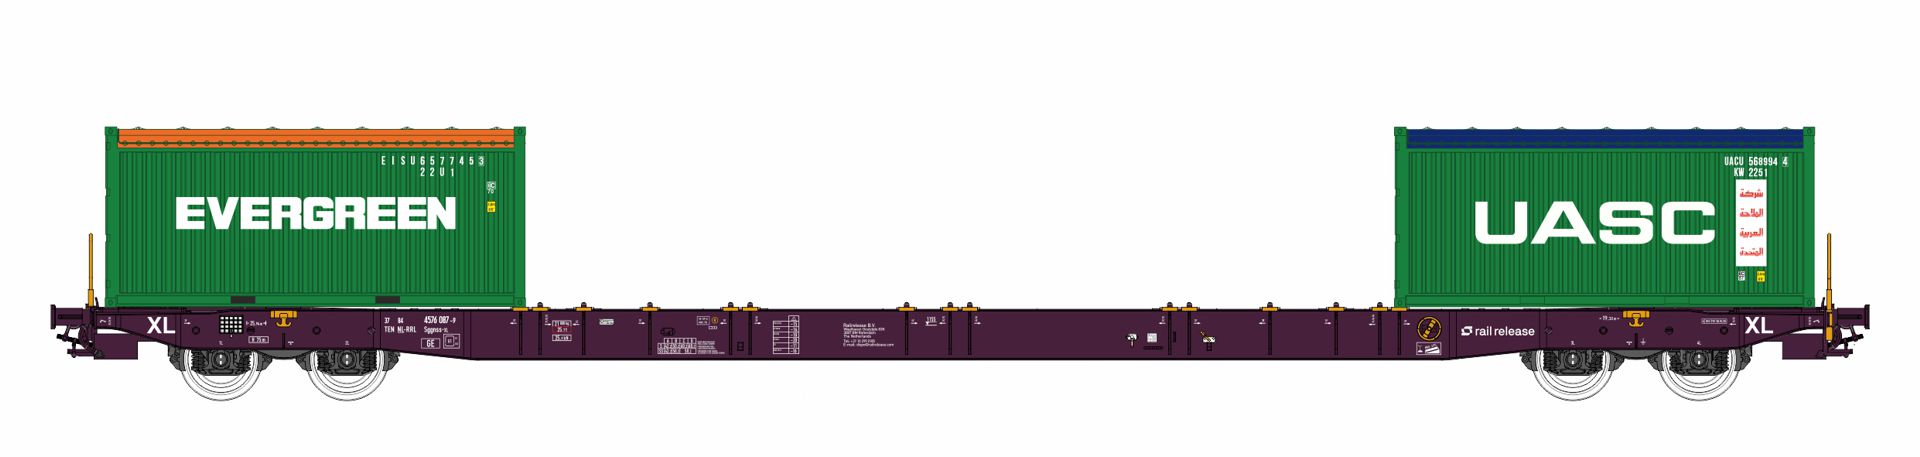 igra 96010076 - Containertragwagen Sggnss-XL, railrelease, Ep.VI 'Evergreen, UASC'